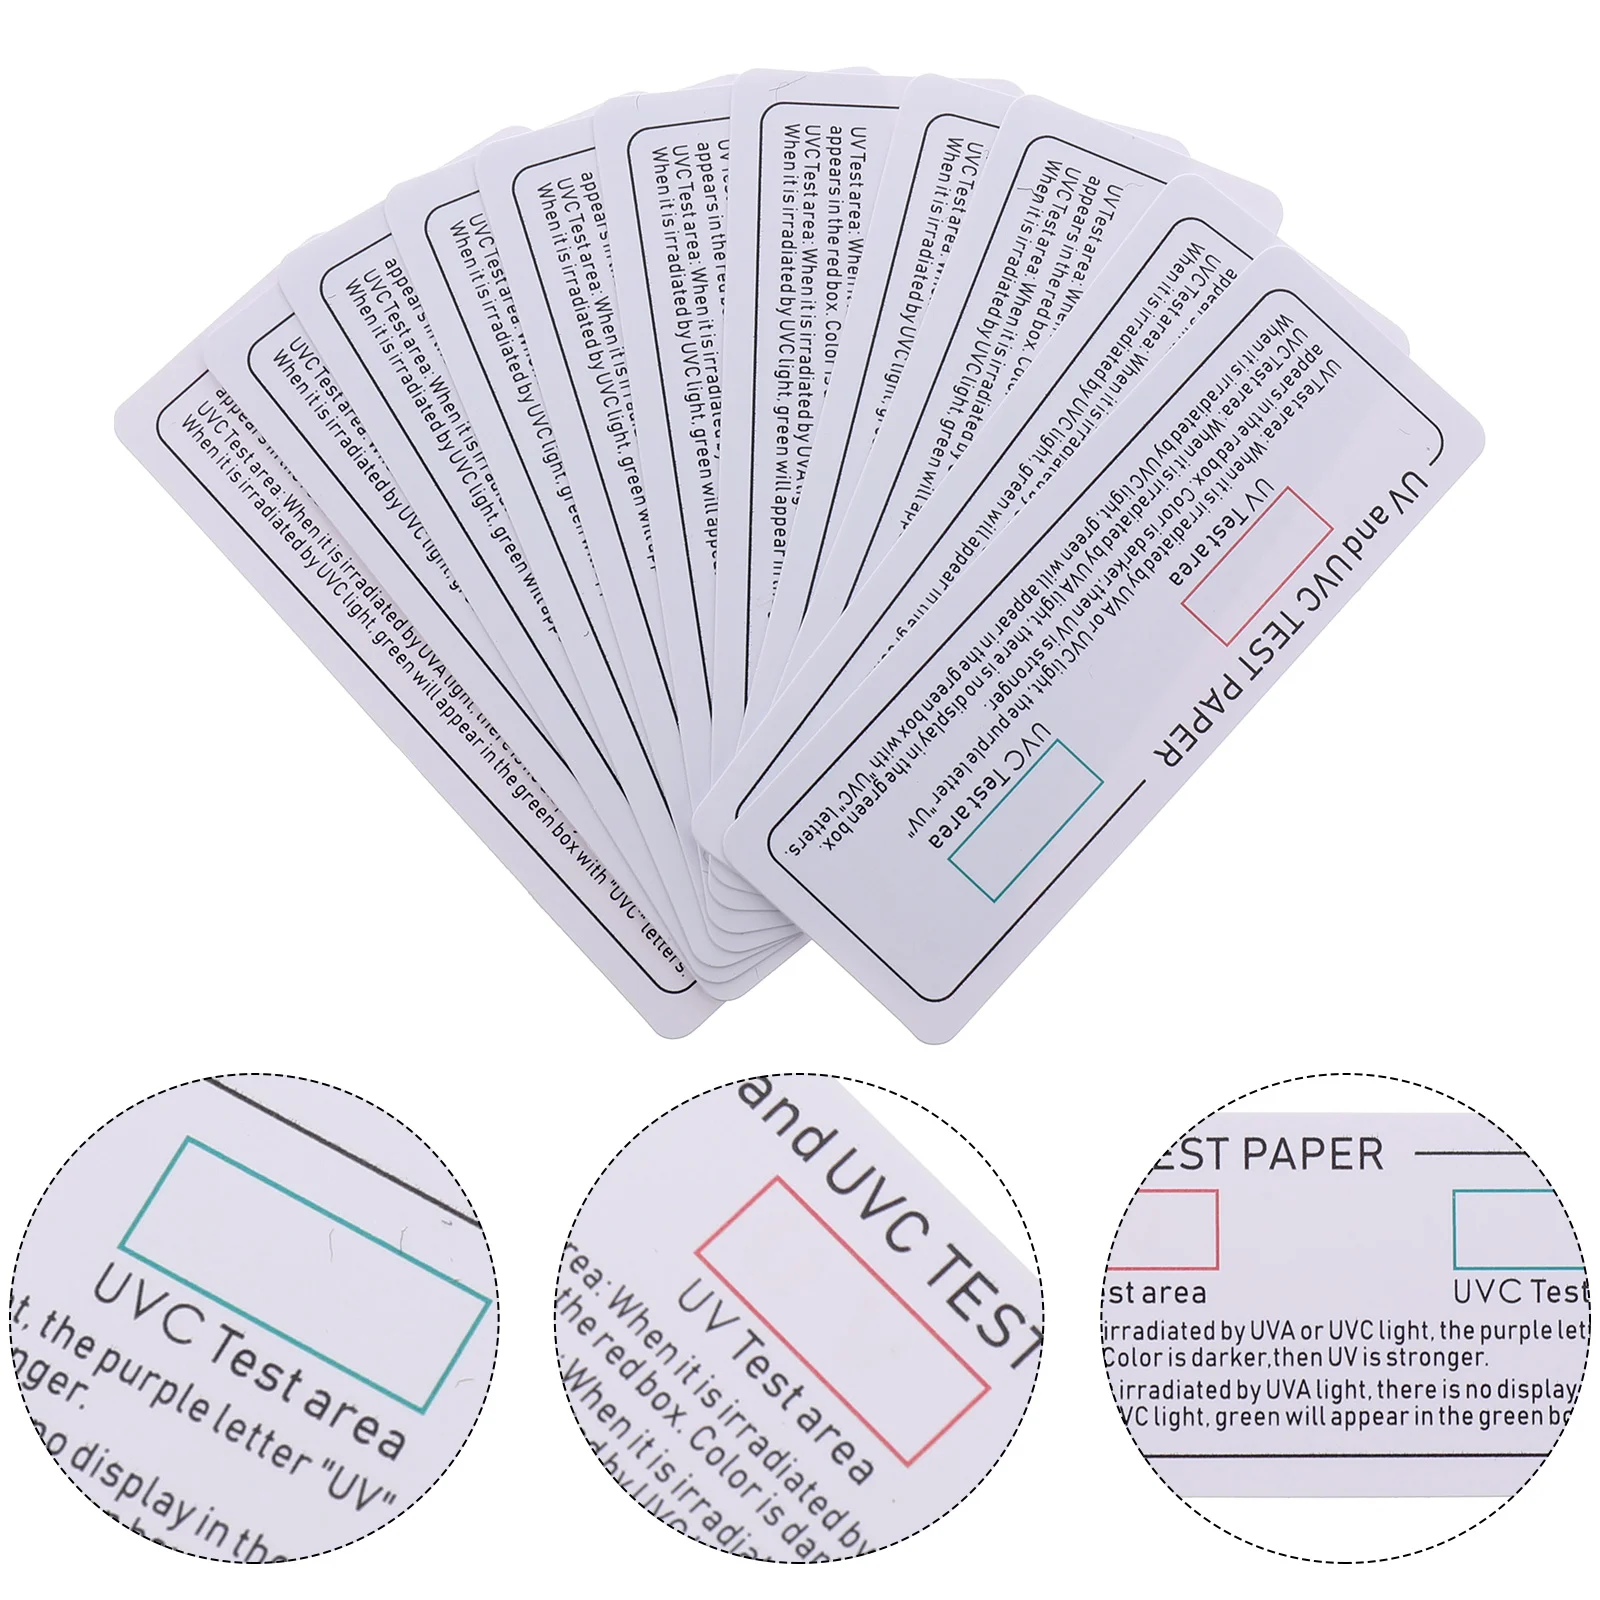 

10 Pcs Discoloration Detection Card UV Test Device Premium Strips 7X2.5CM Papers Pvc Light Effect Tester